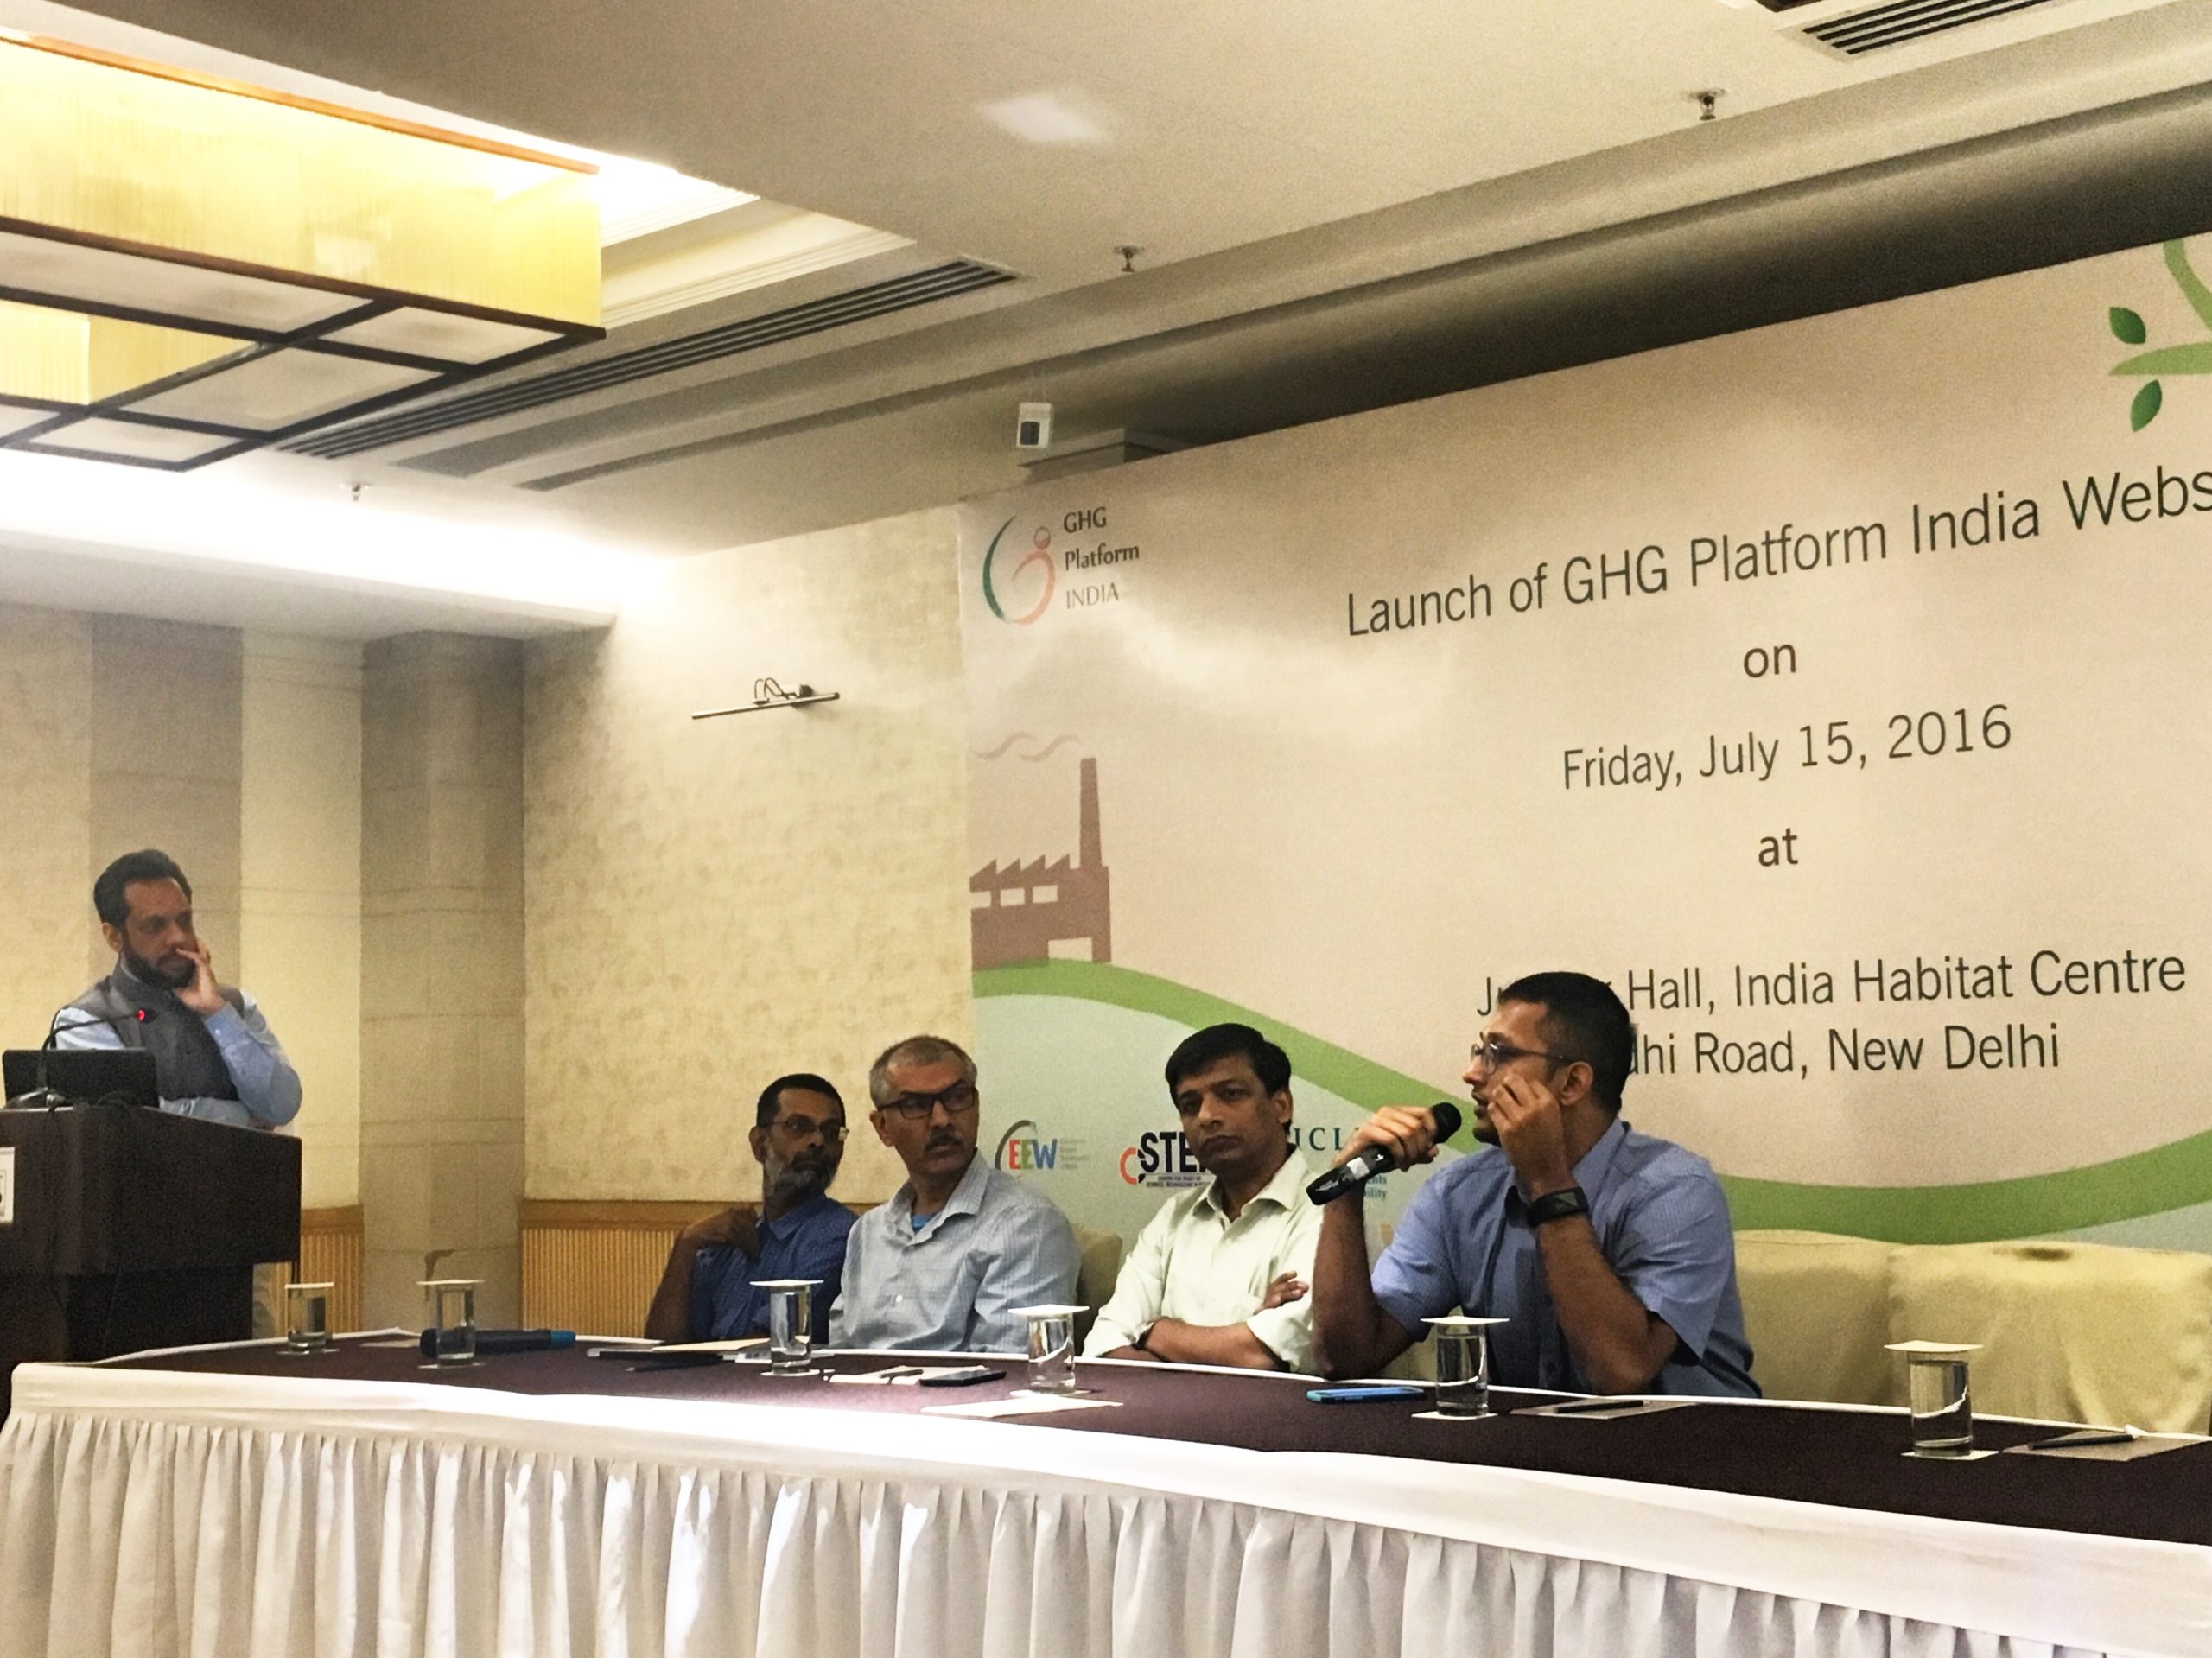 GHG Platform India Website Launch